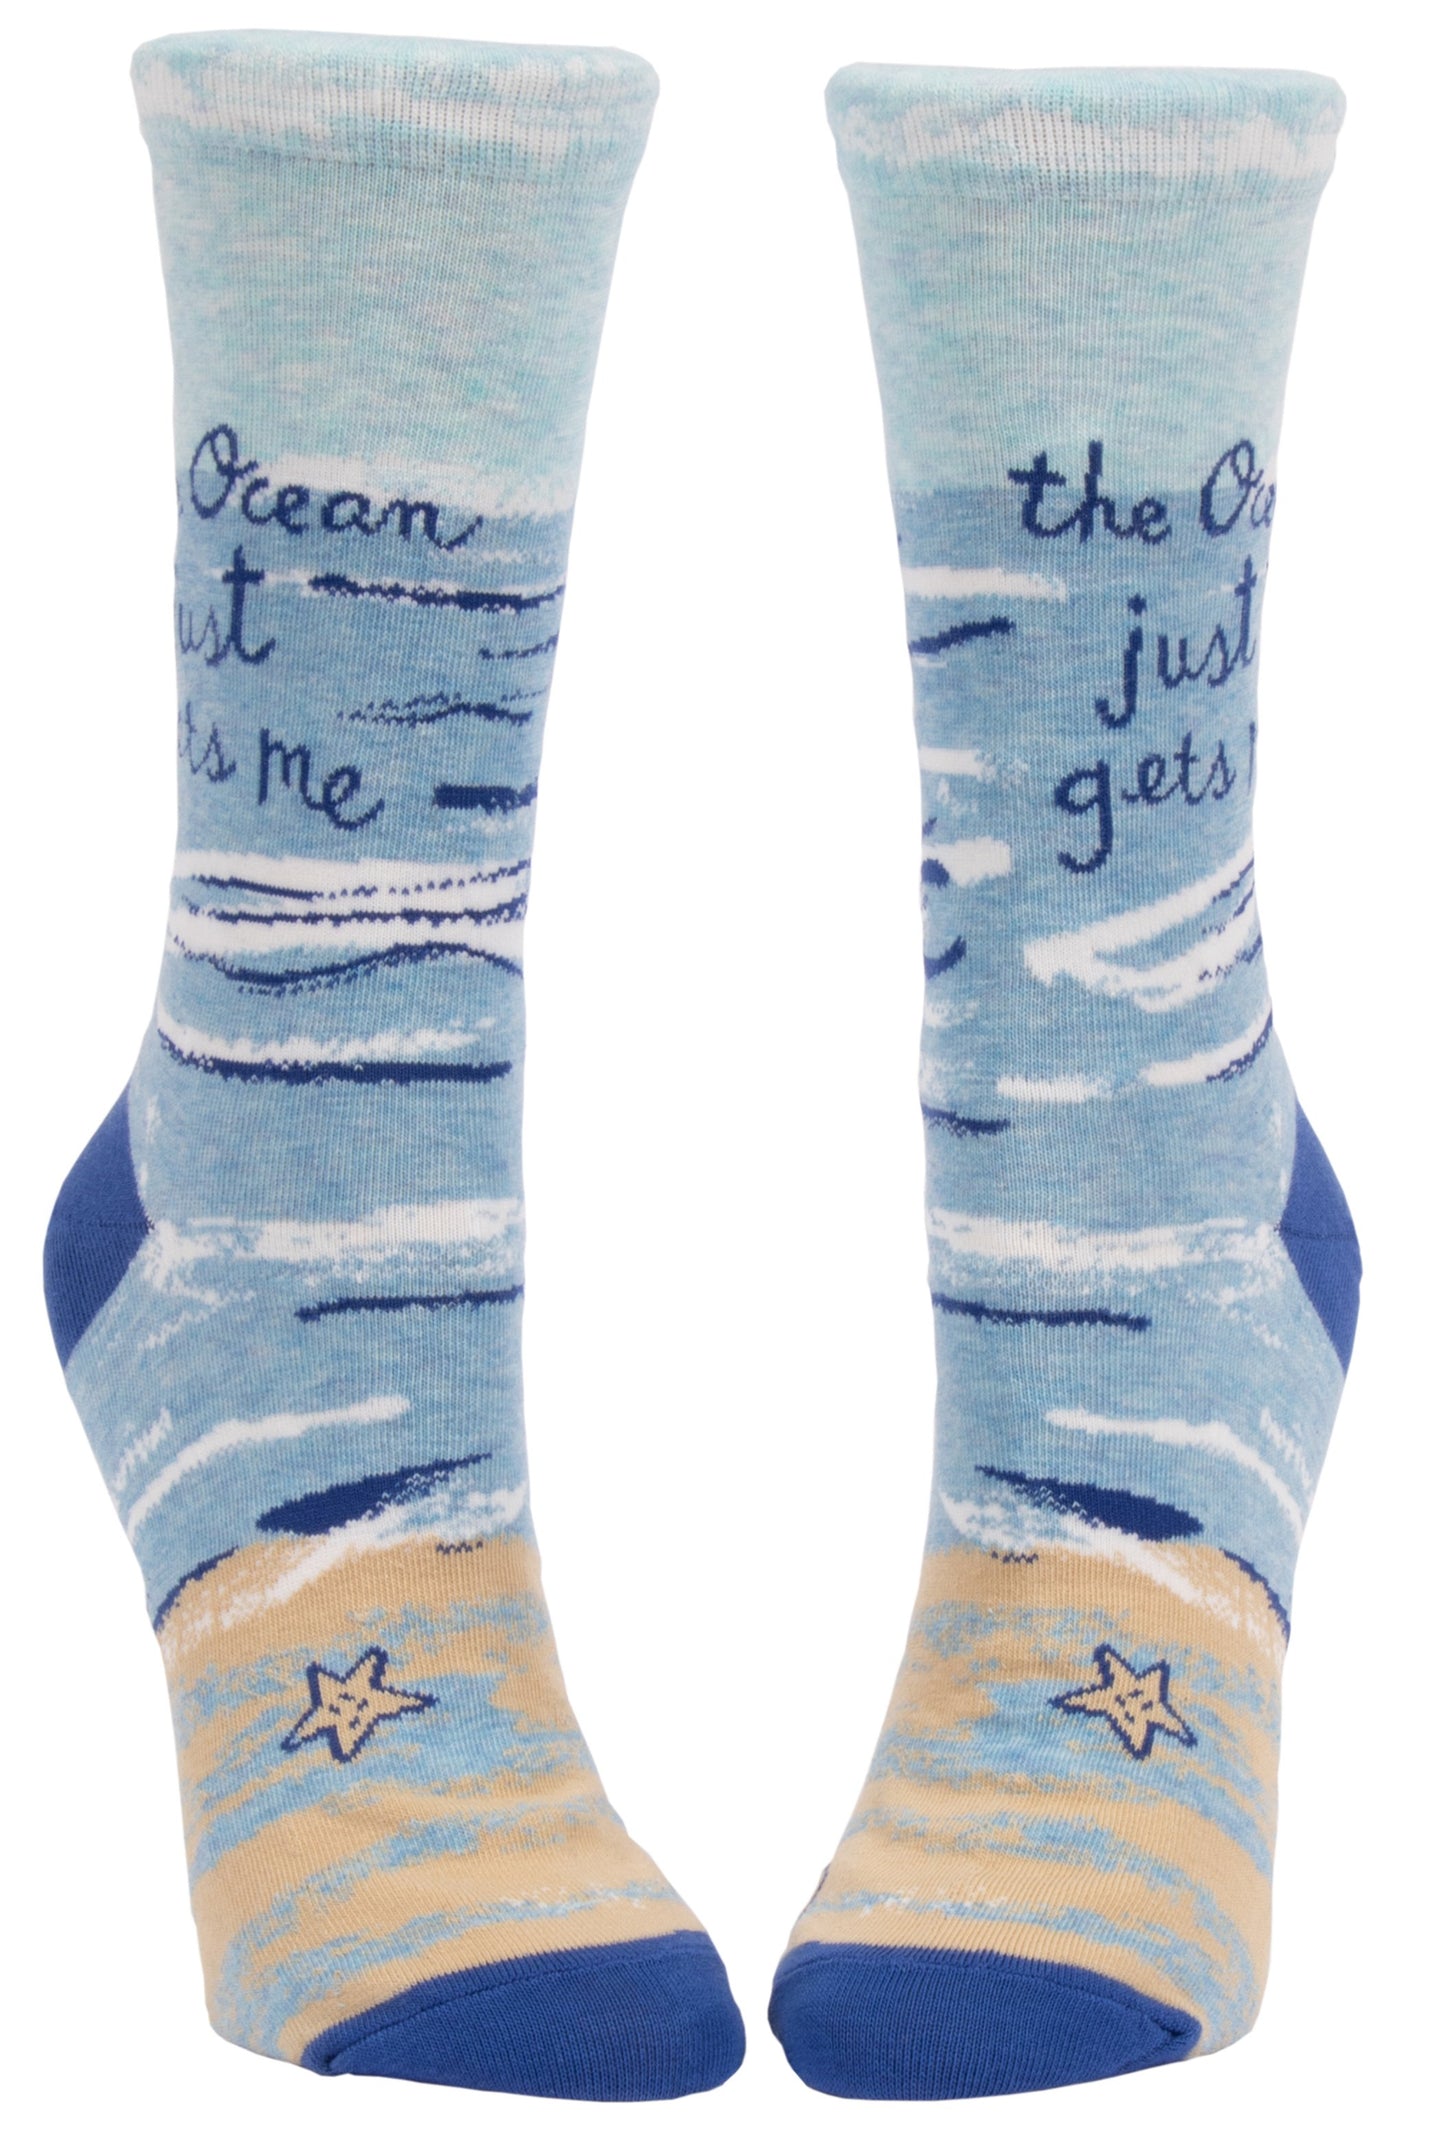 Blue Q - Women's Crew Socks - The Ocean Just Gets Me